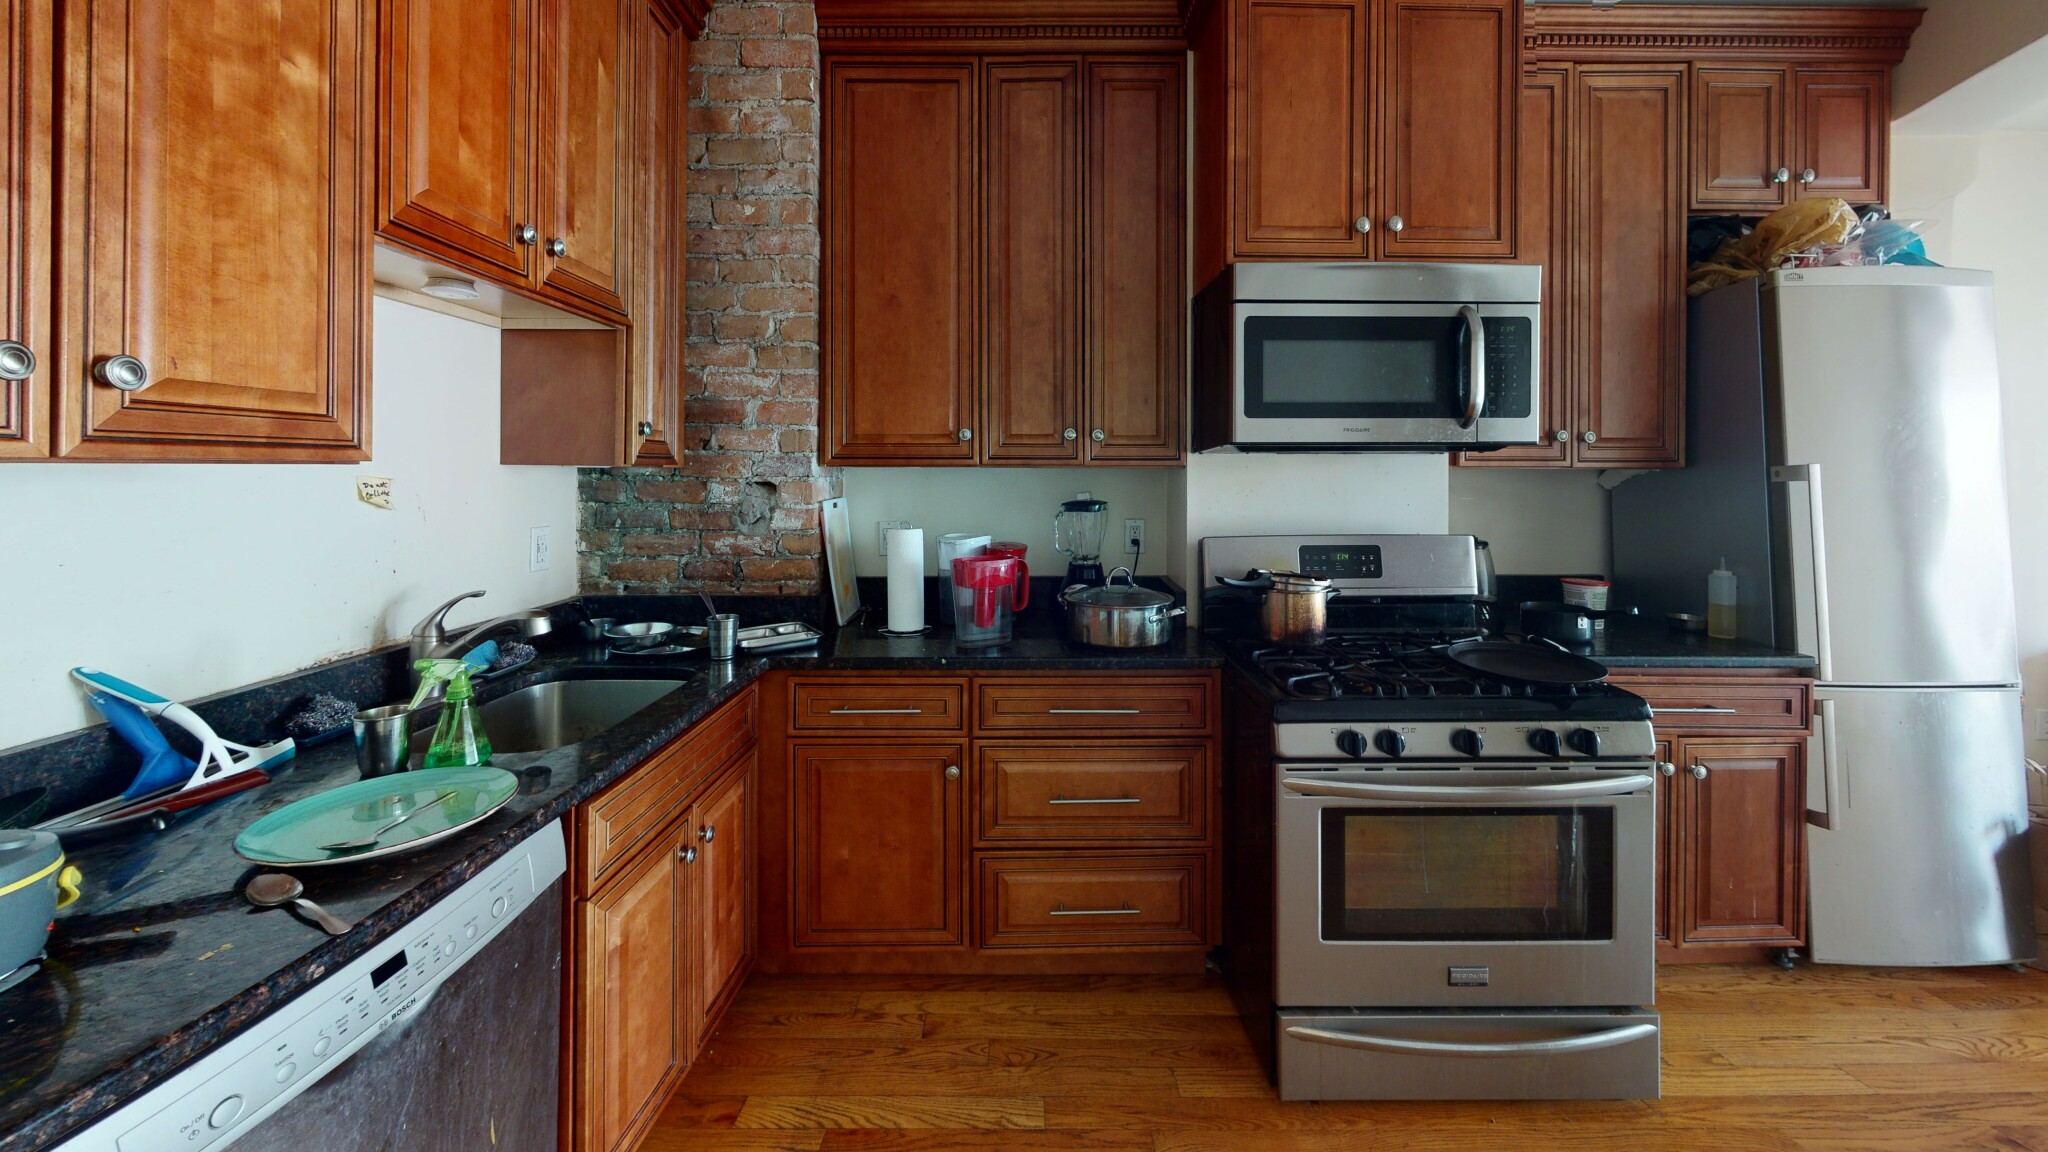 Photos of apartment on Highland St.,Boston MA 02119